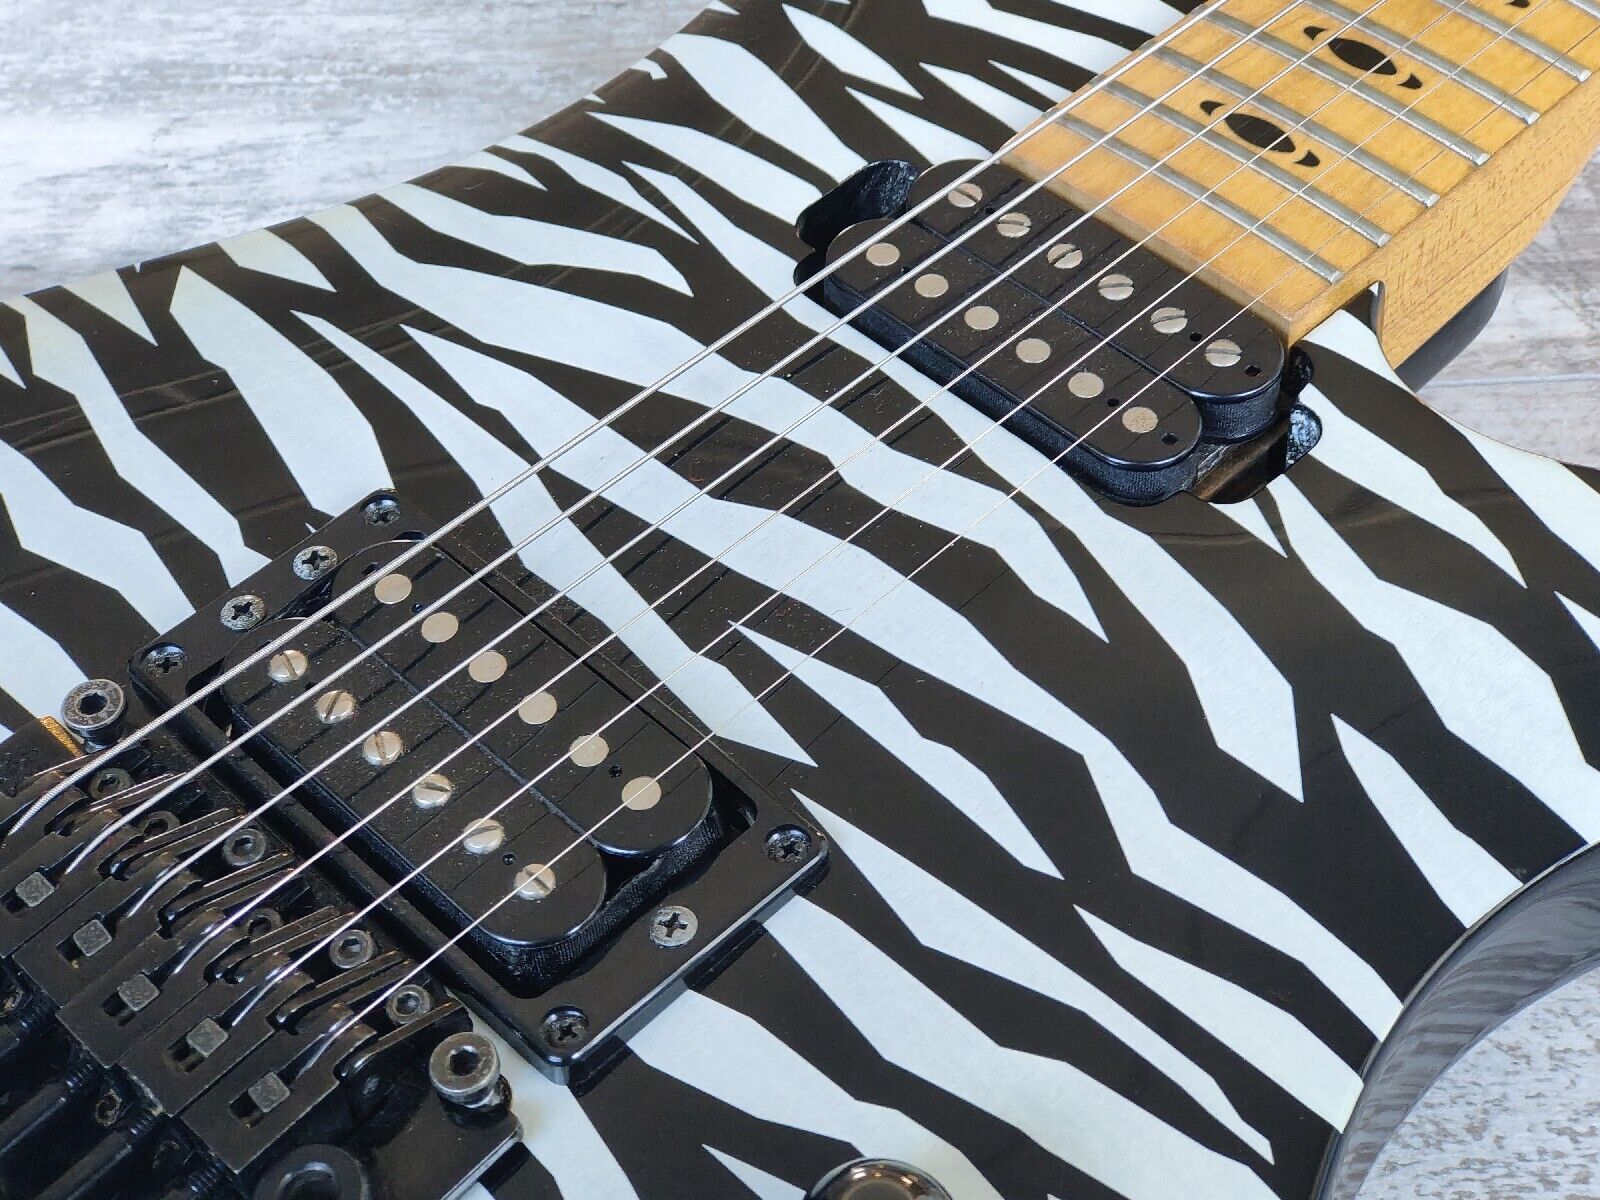 1994 Yamaha Japan MGM111 Special Edition Electric Guitar (Zebra Stripe)